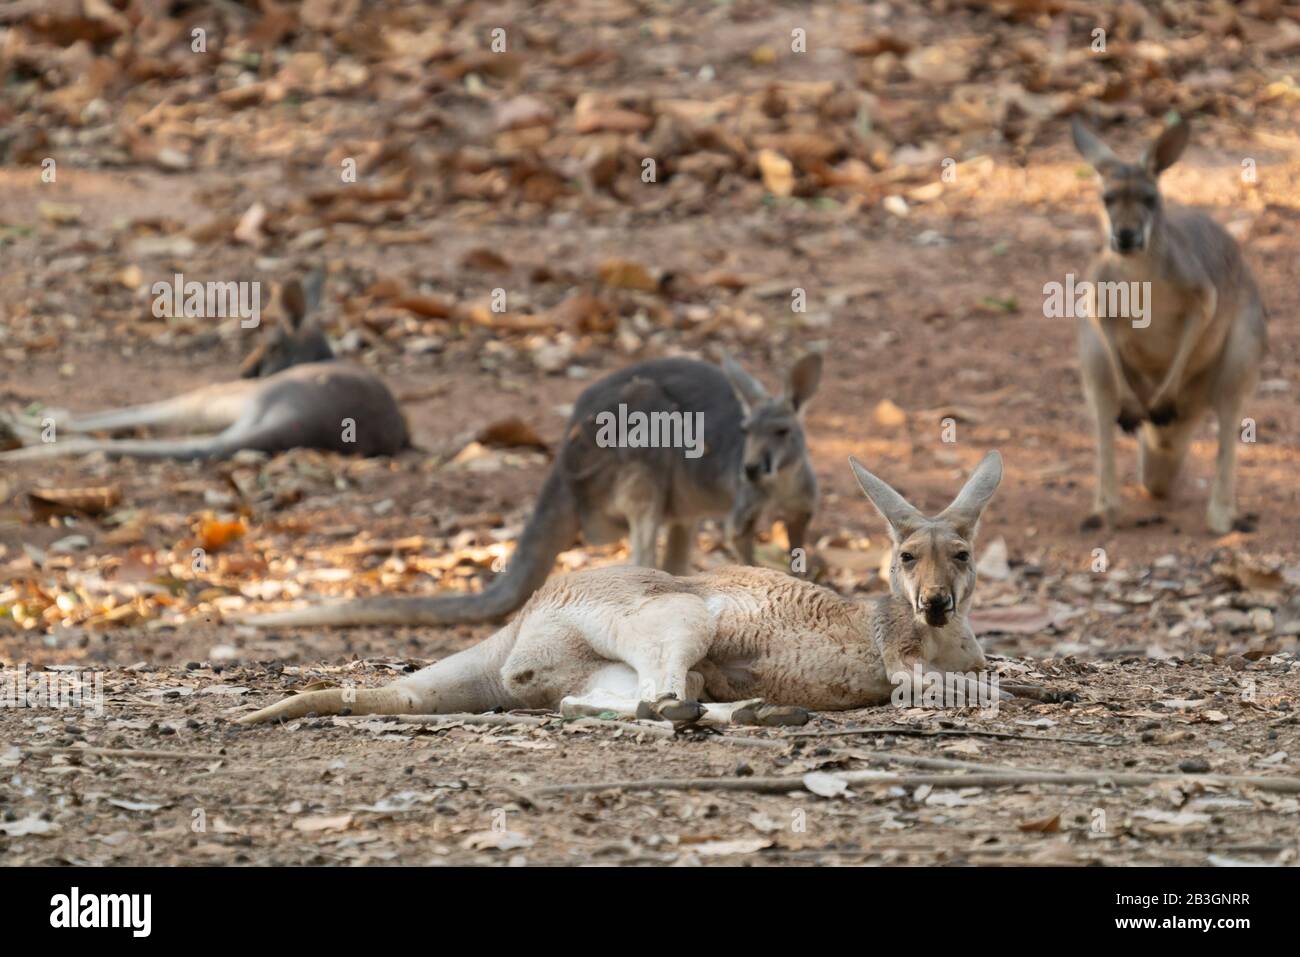 kangaroo lying on the ground Stock Photo